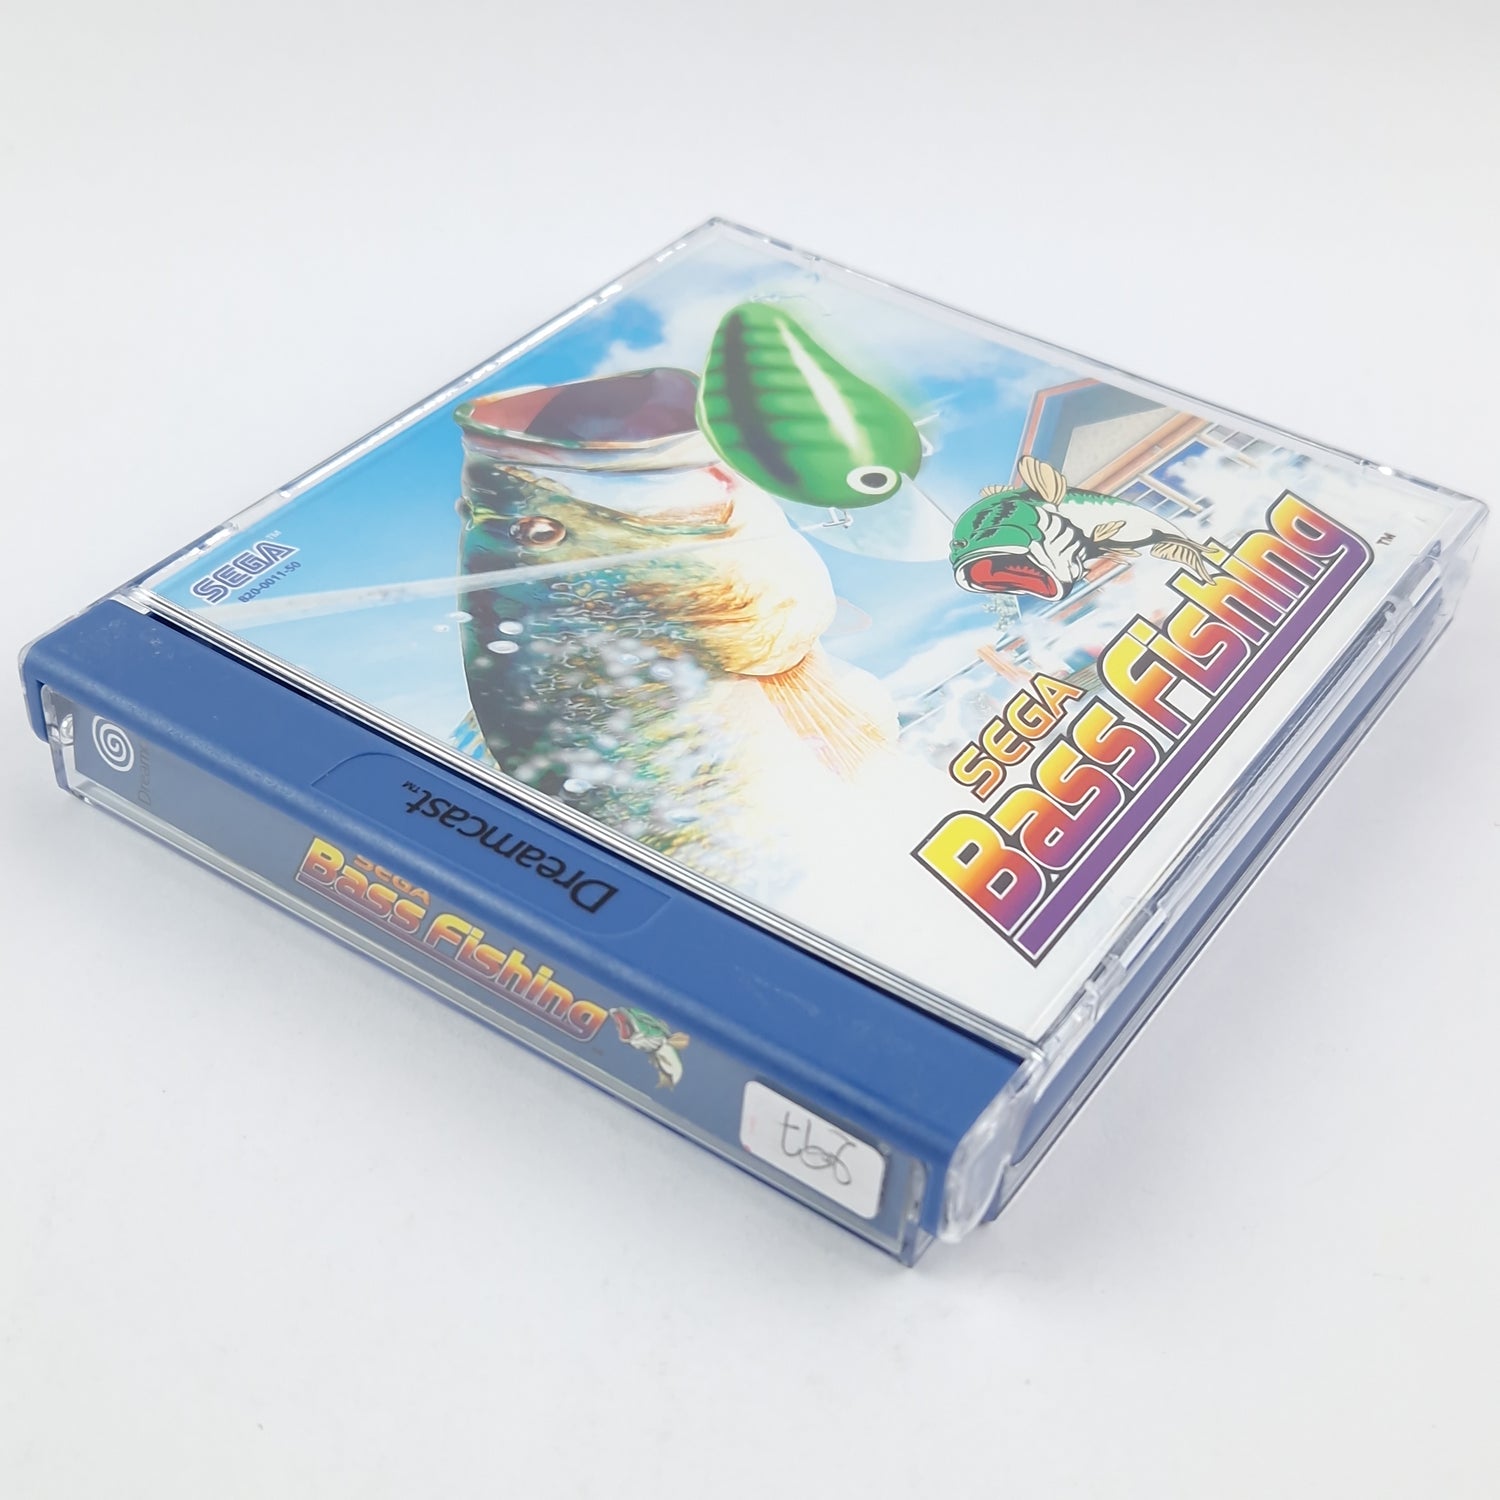 Sega Dreamcast Game: Sega Bass Fishing - CD Disk Instructions OVP / DC Fishing